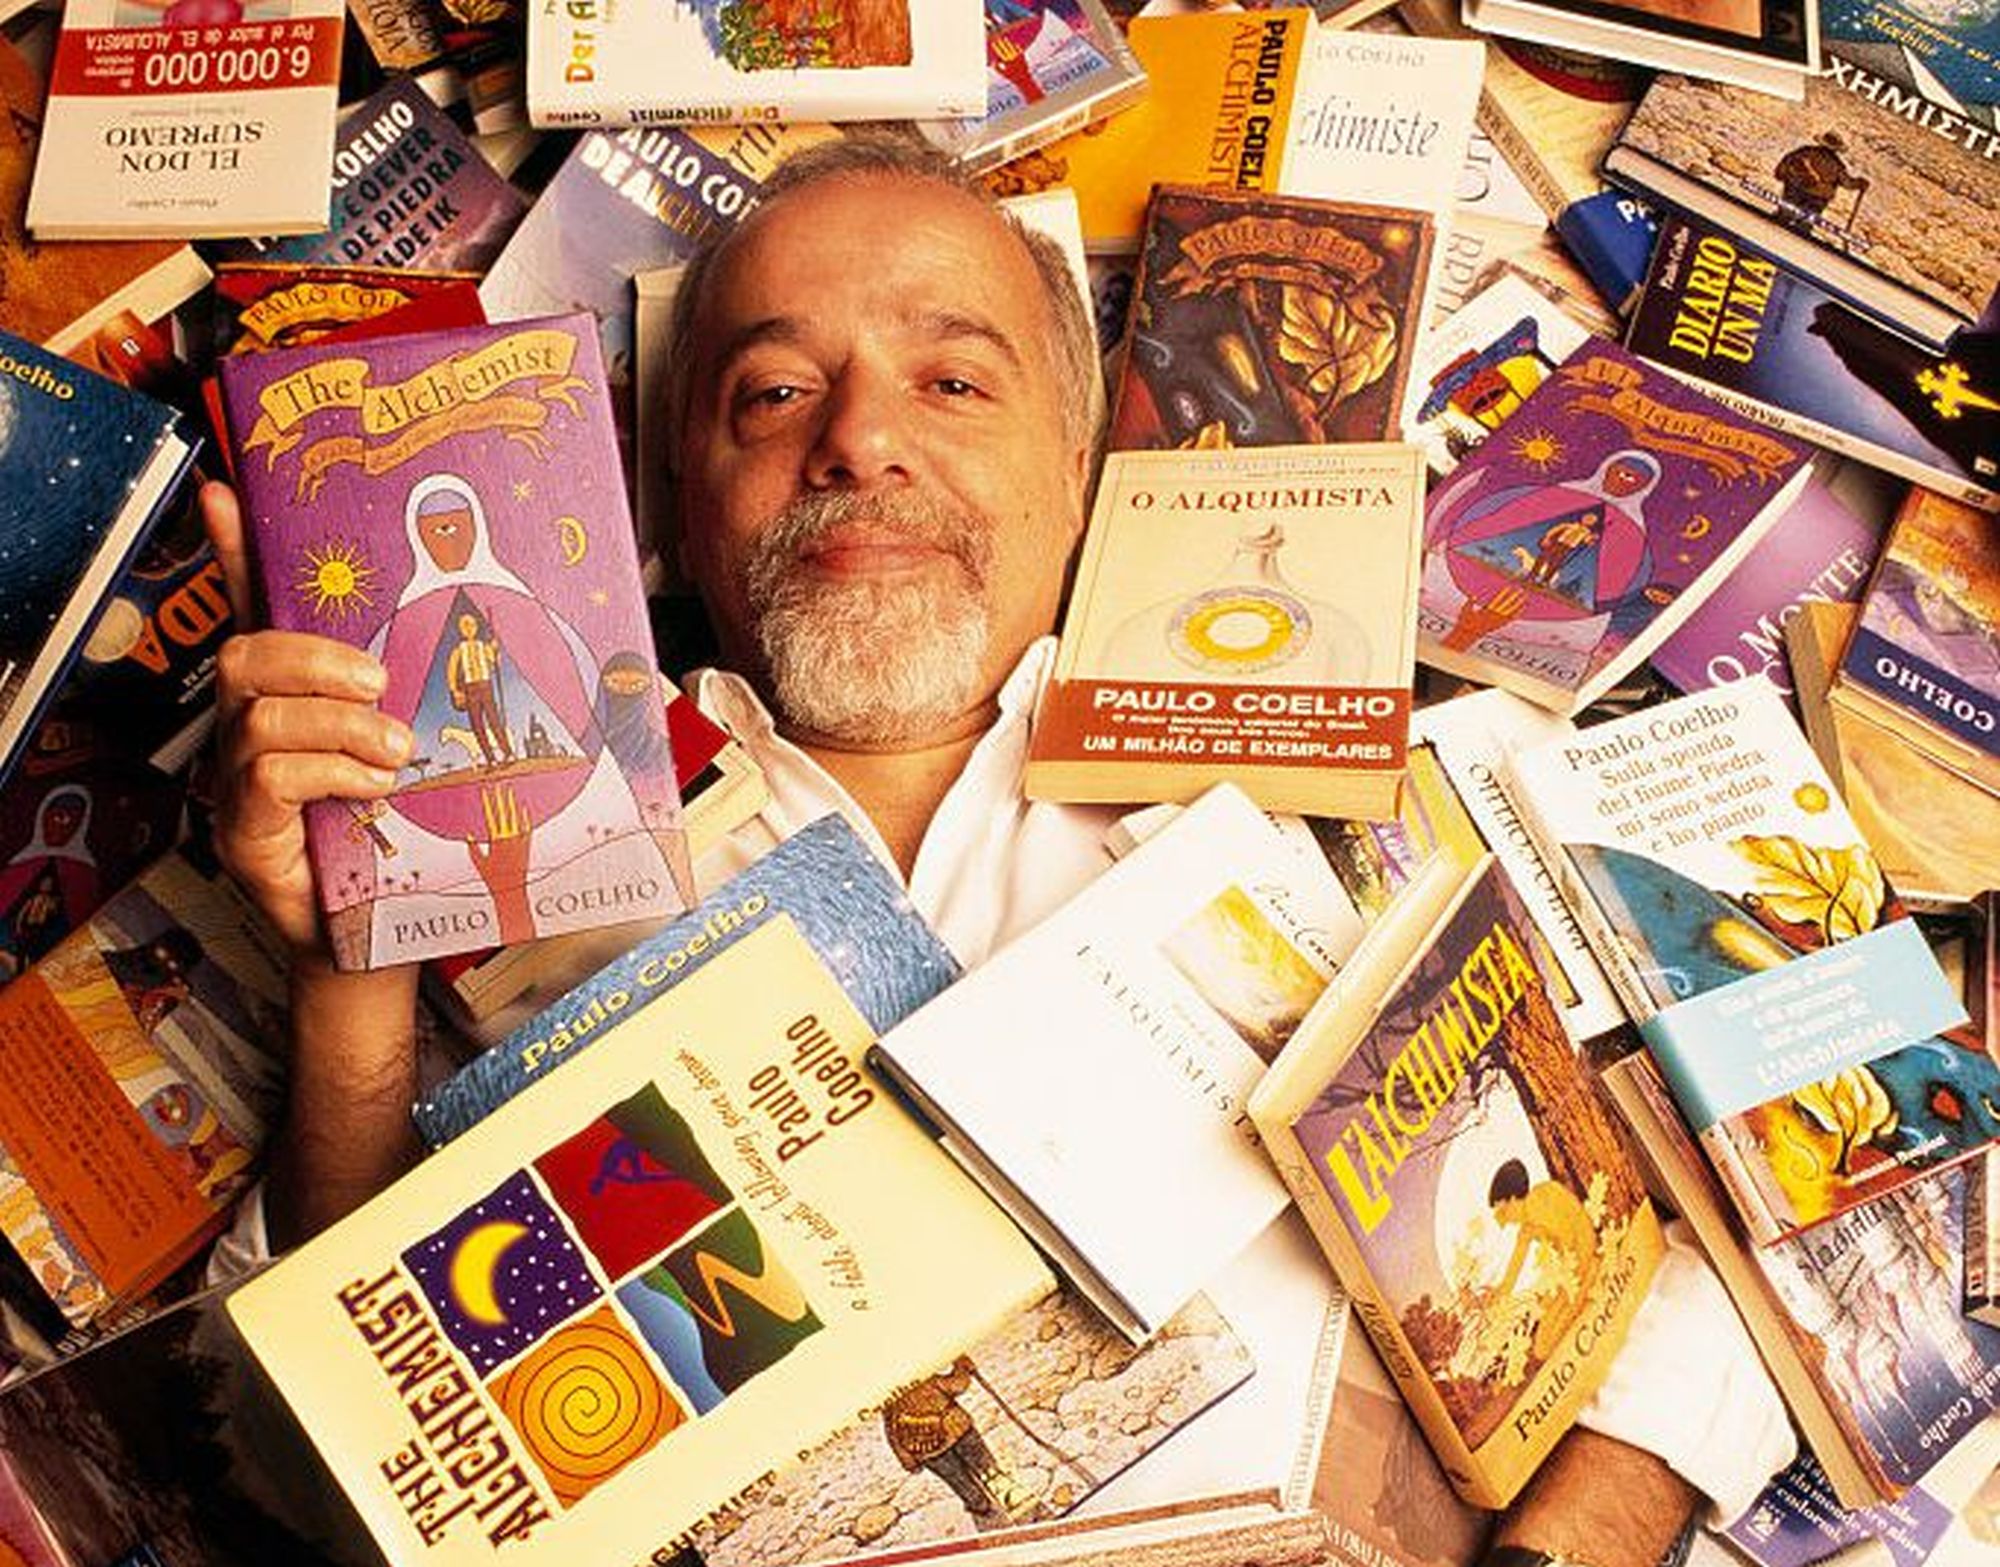 Paulo Coelho is an international literary star